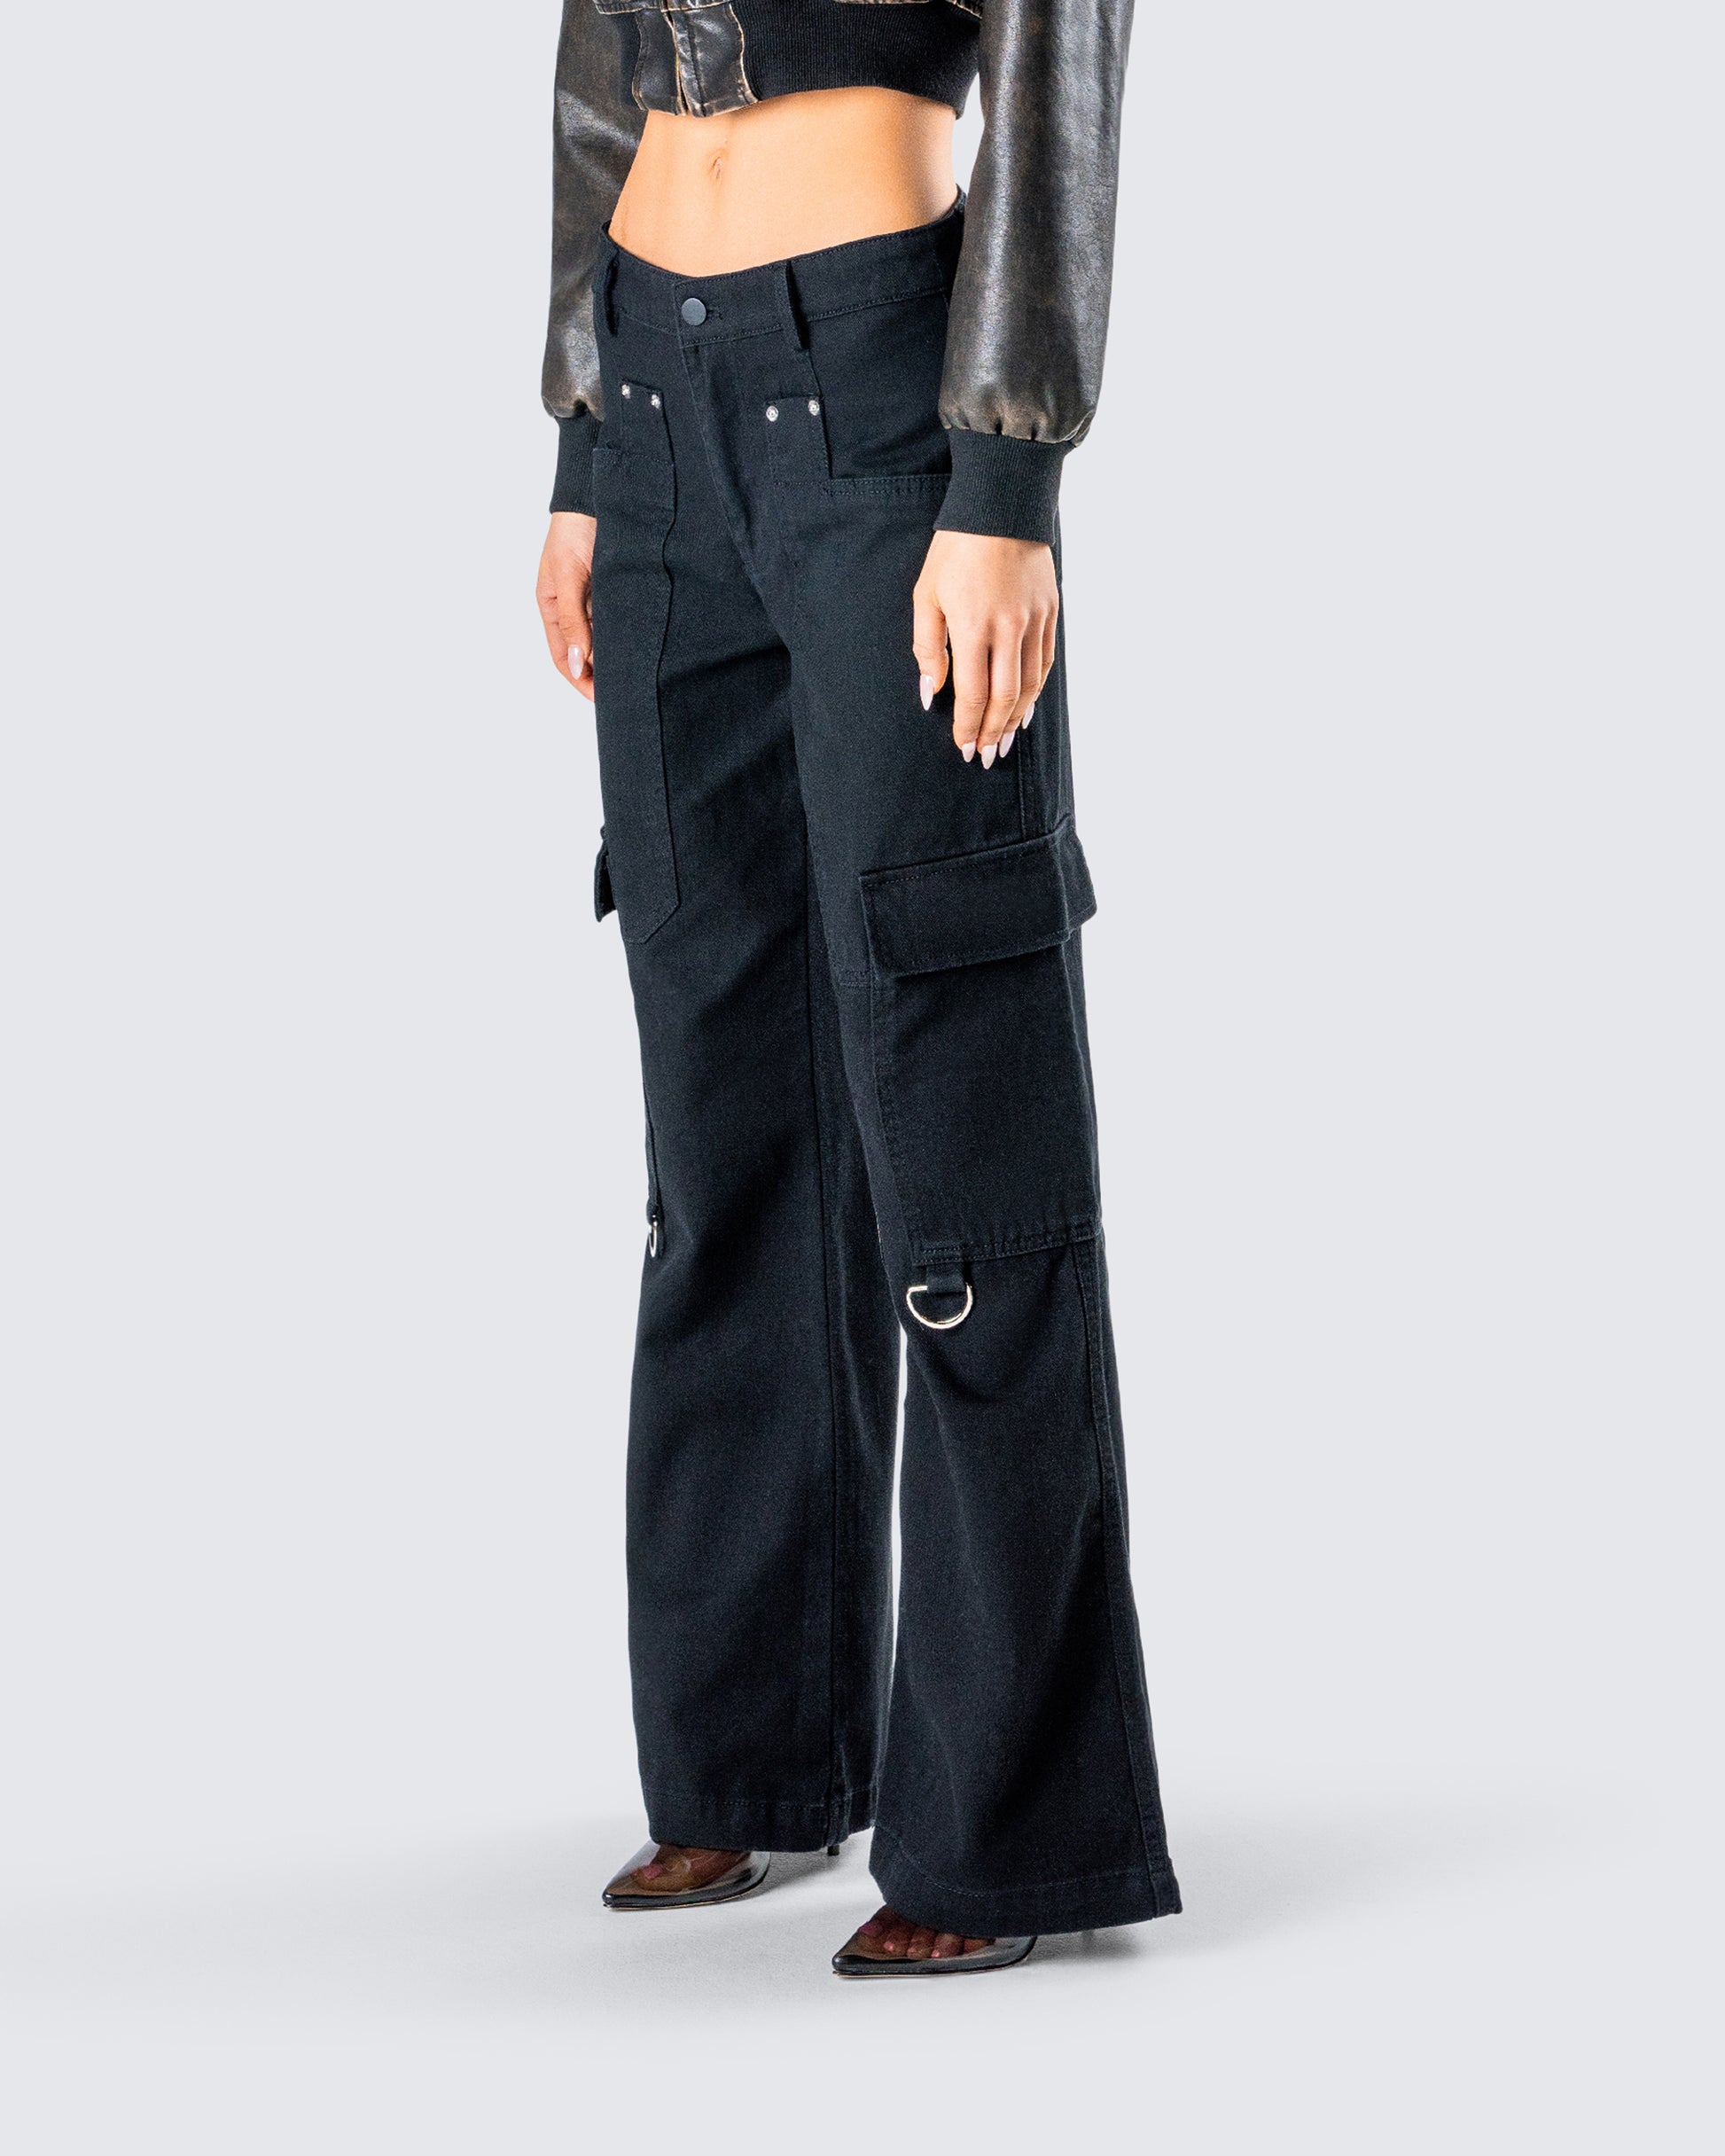 Black Twill Pocket High Waist Cargo Pants